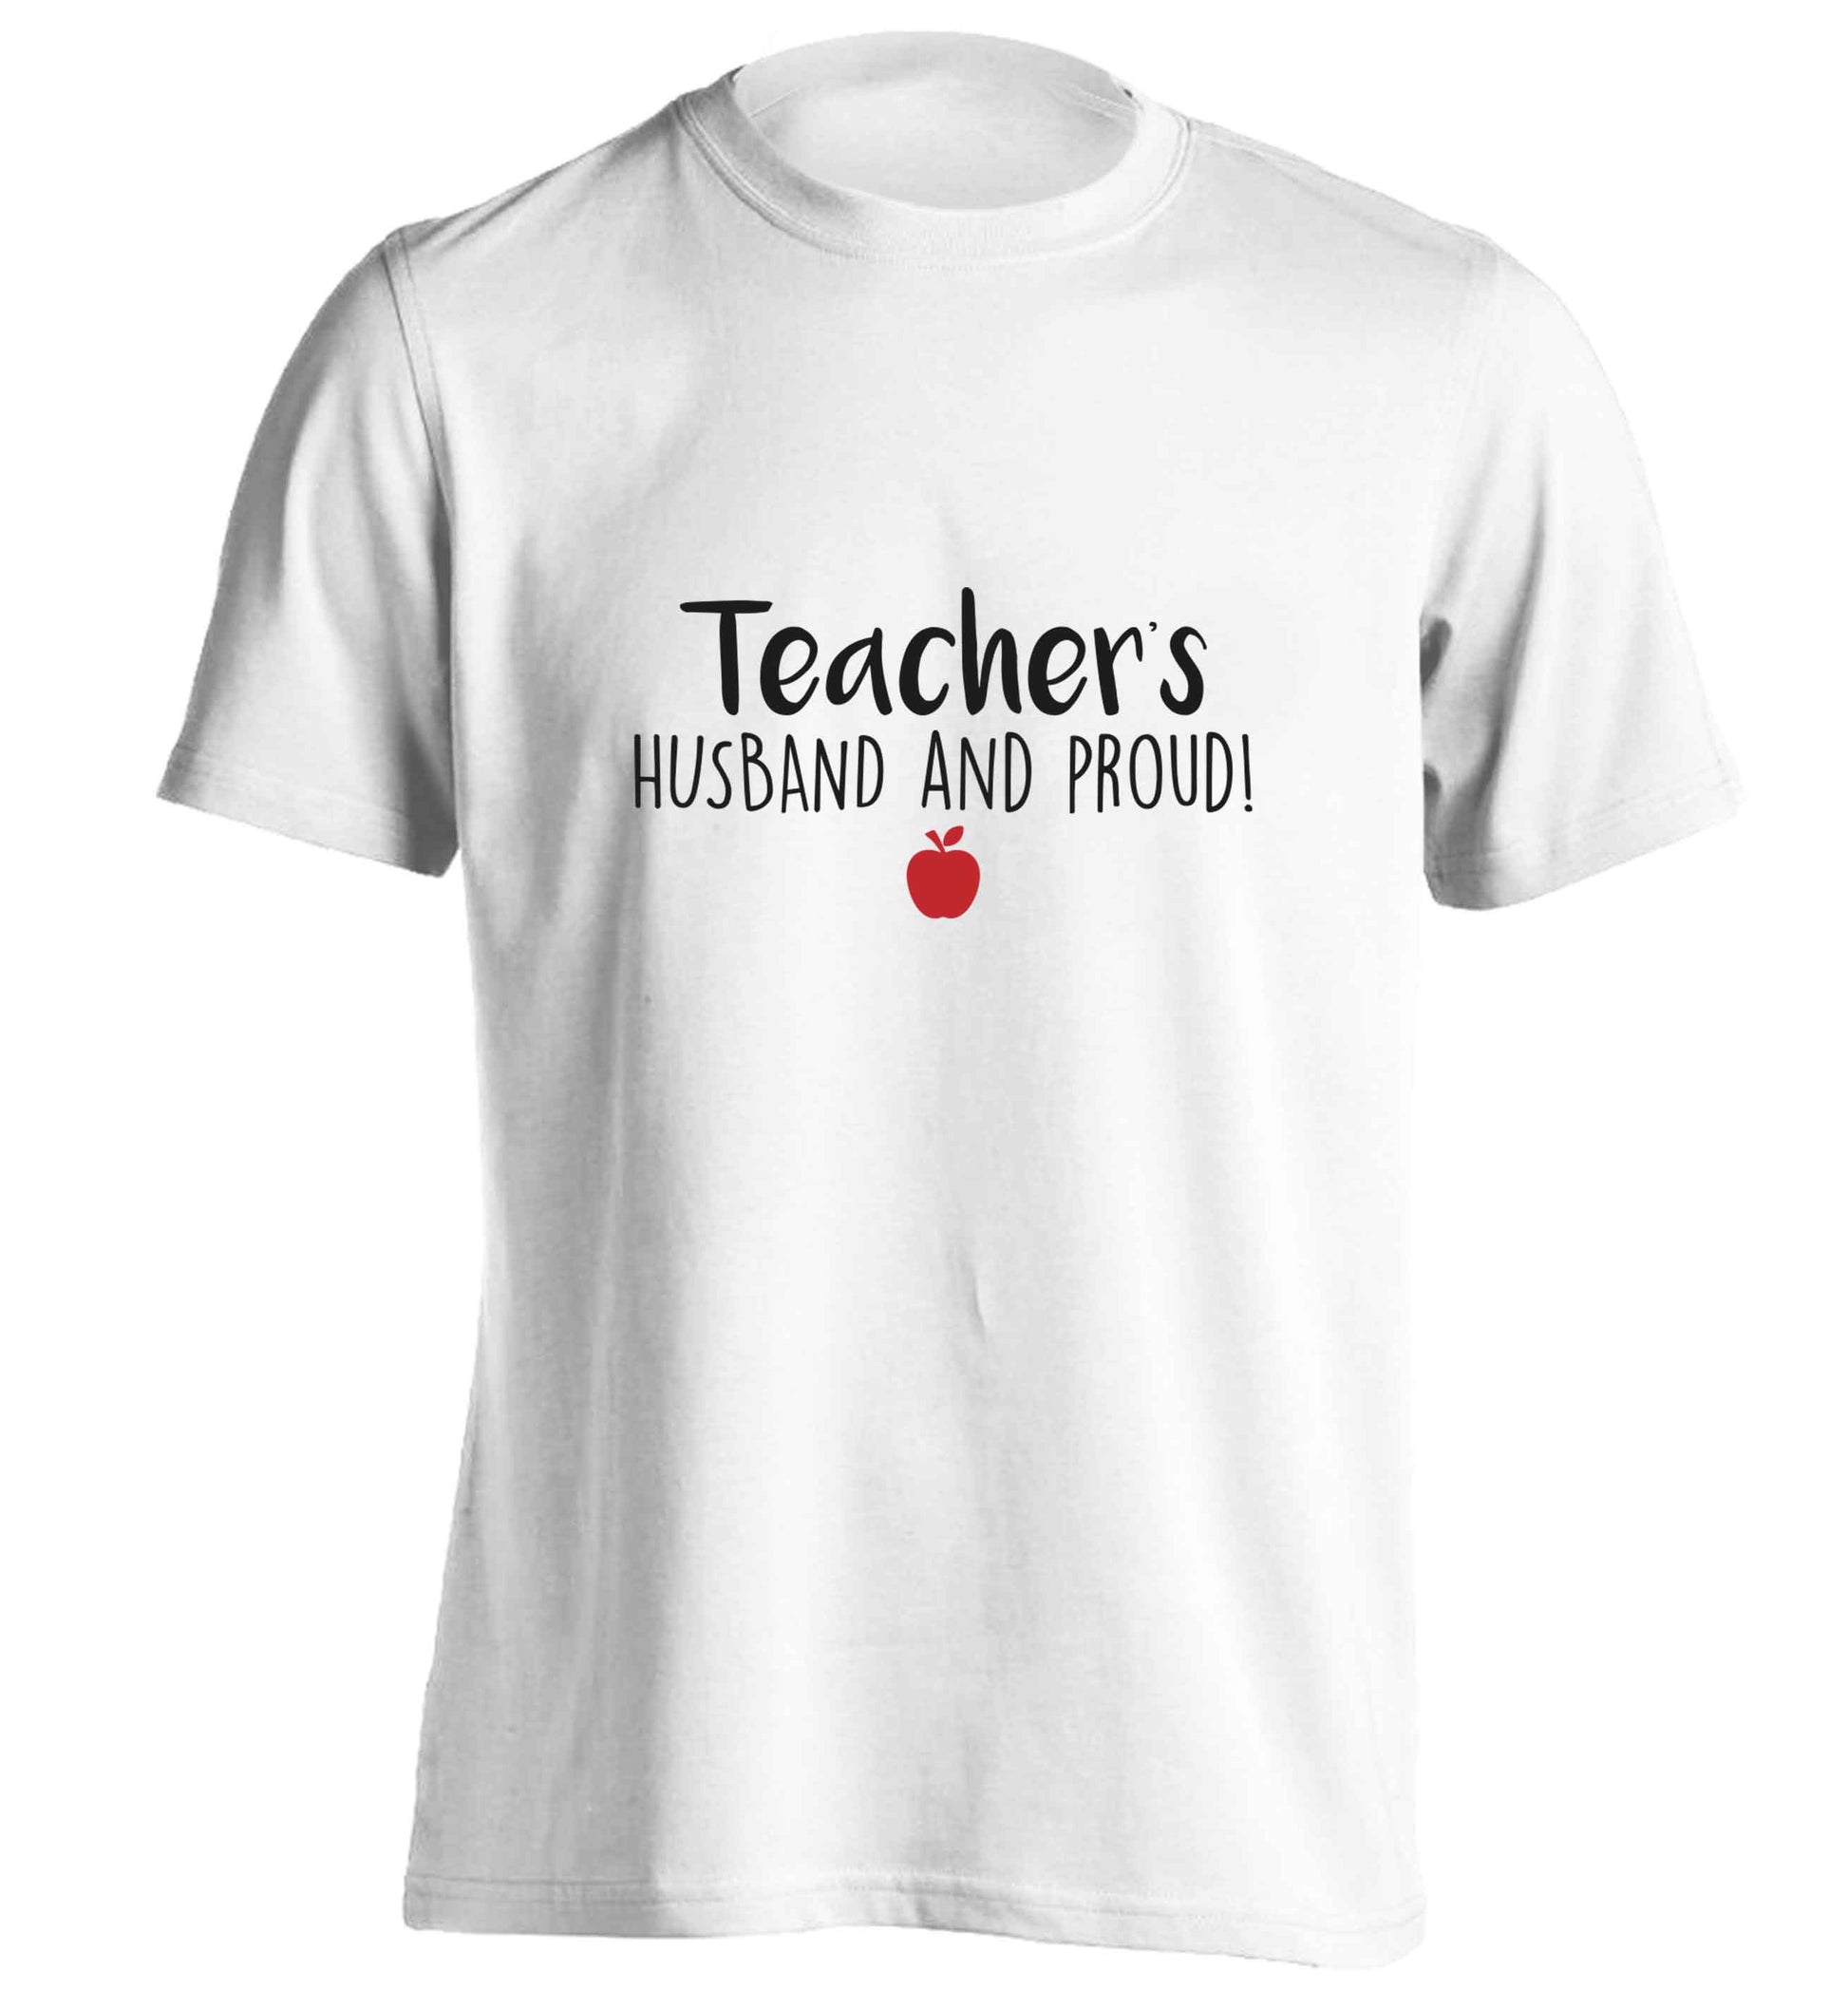 Teachers husband and proud adults unisex white Tshirt 2XL